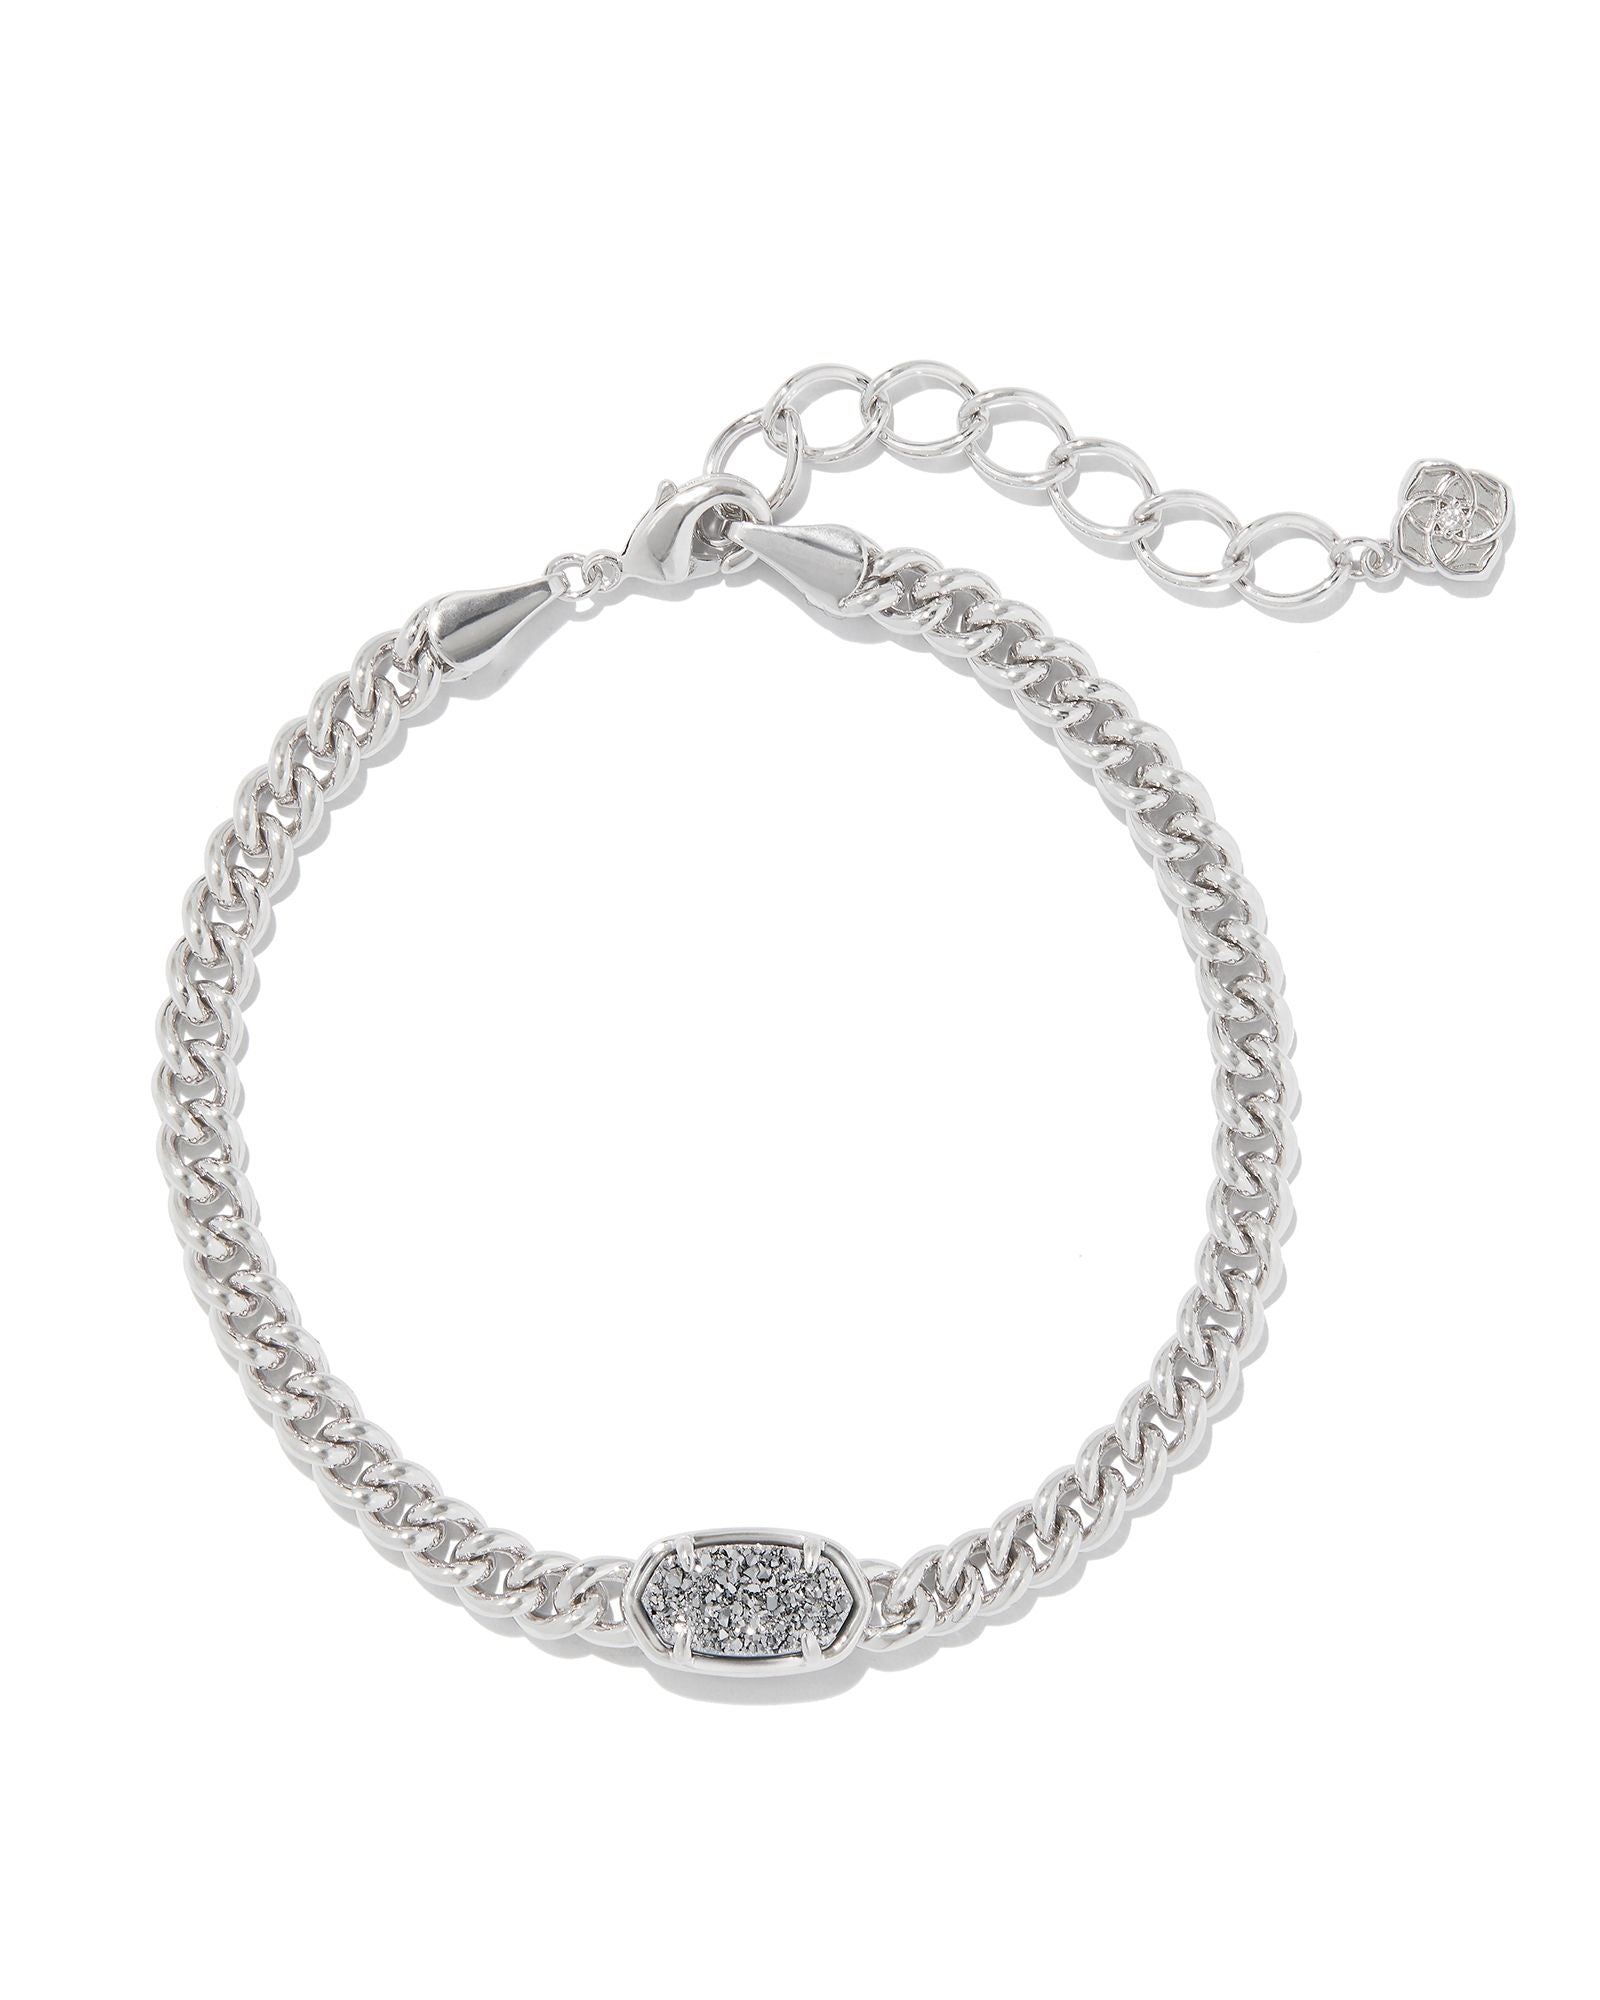 Grayson Delicate Link and Chain Bracelet Rhodium Platinum Drusy